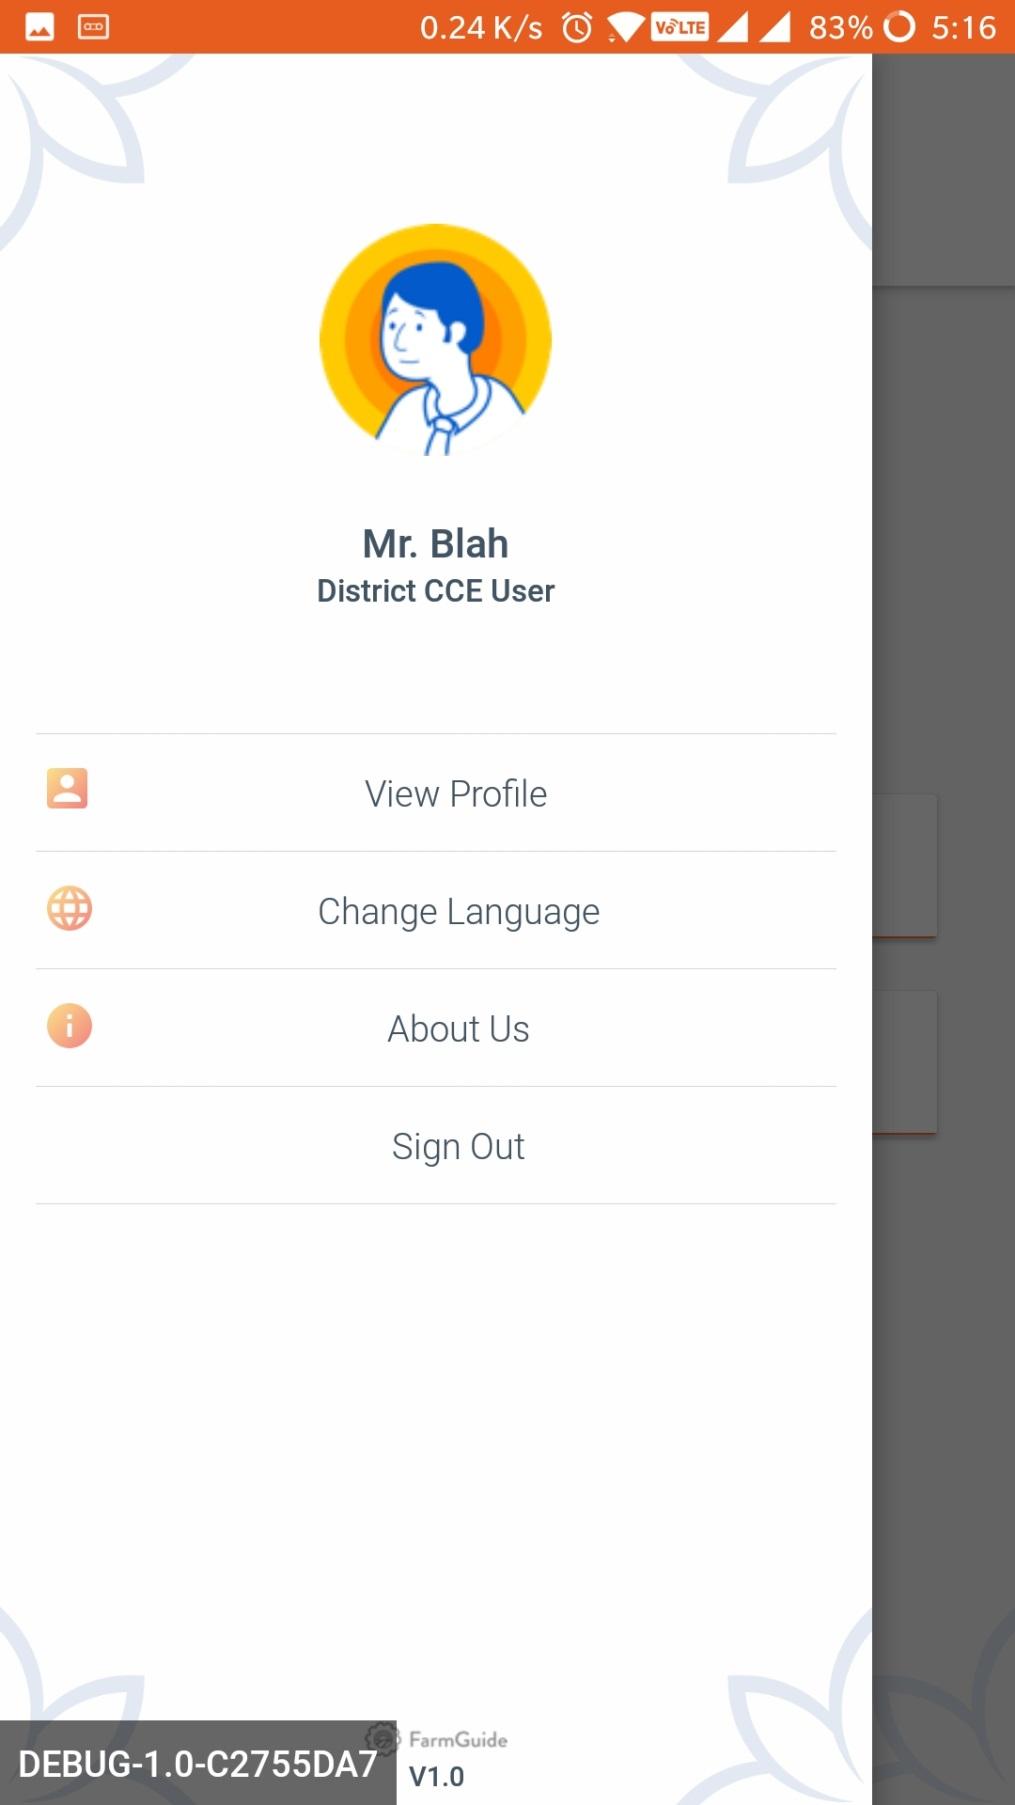 User Profile User Profile :- User can view profile, change language if required